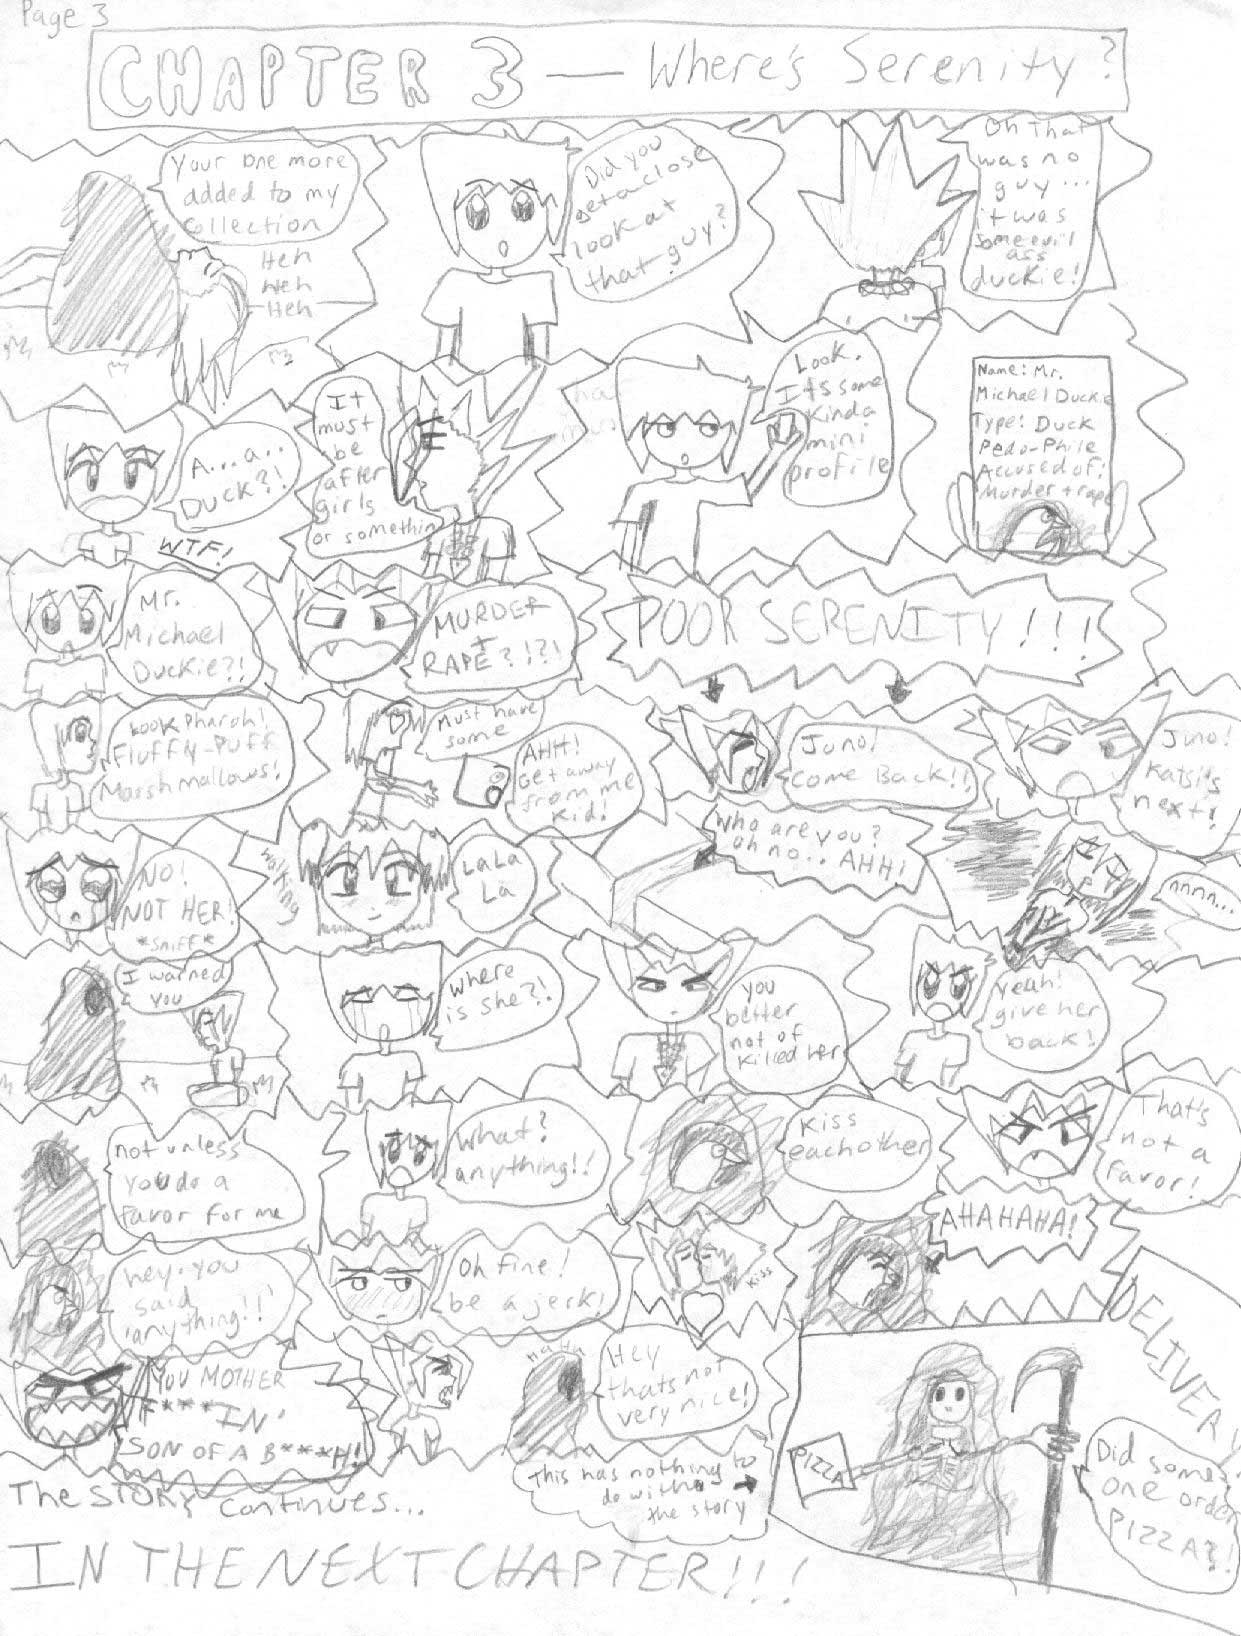 Yu-Gi-Oh comic page 3 by kittykatt107